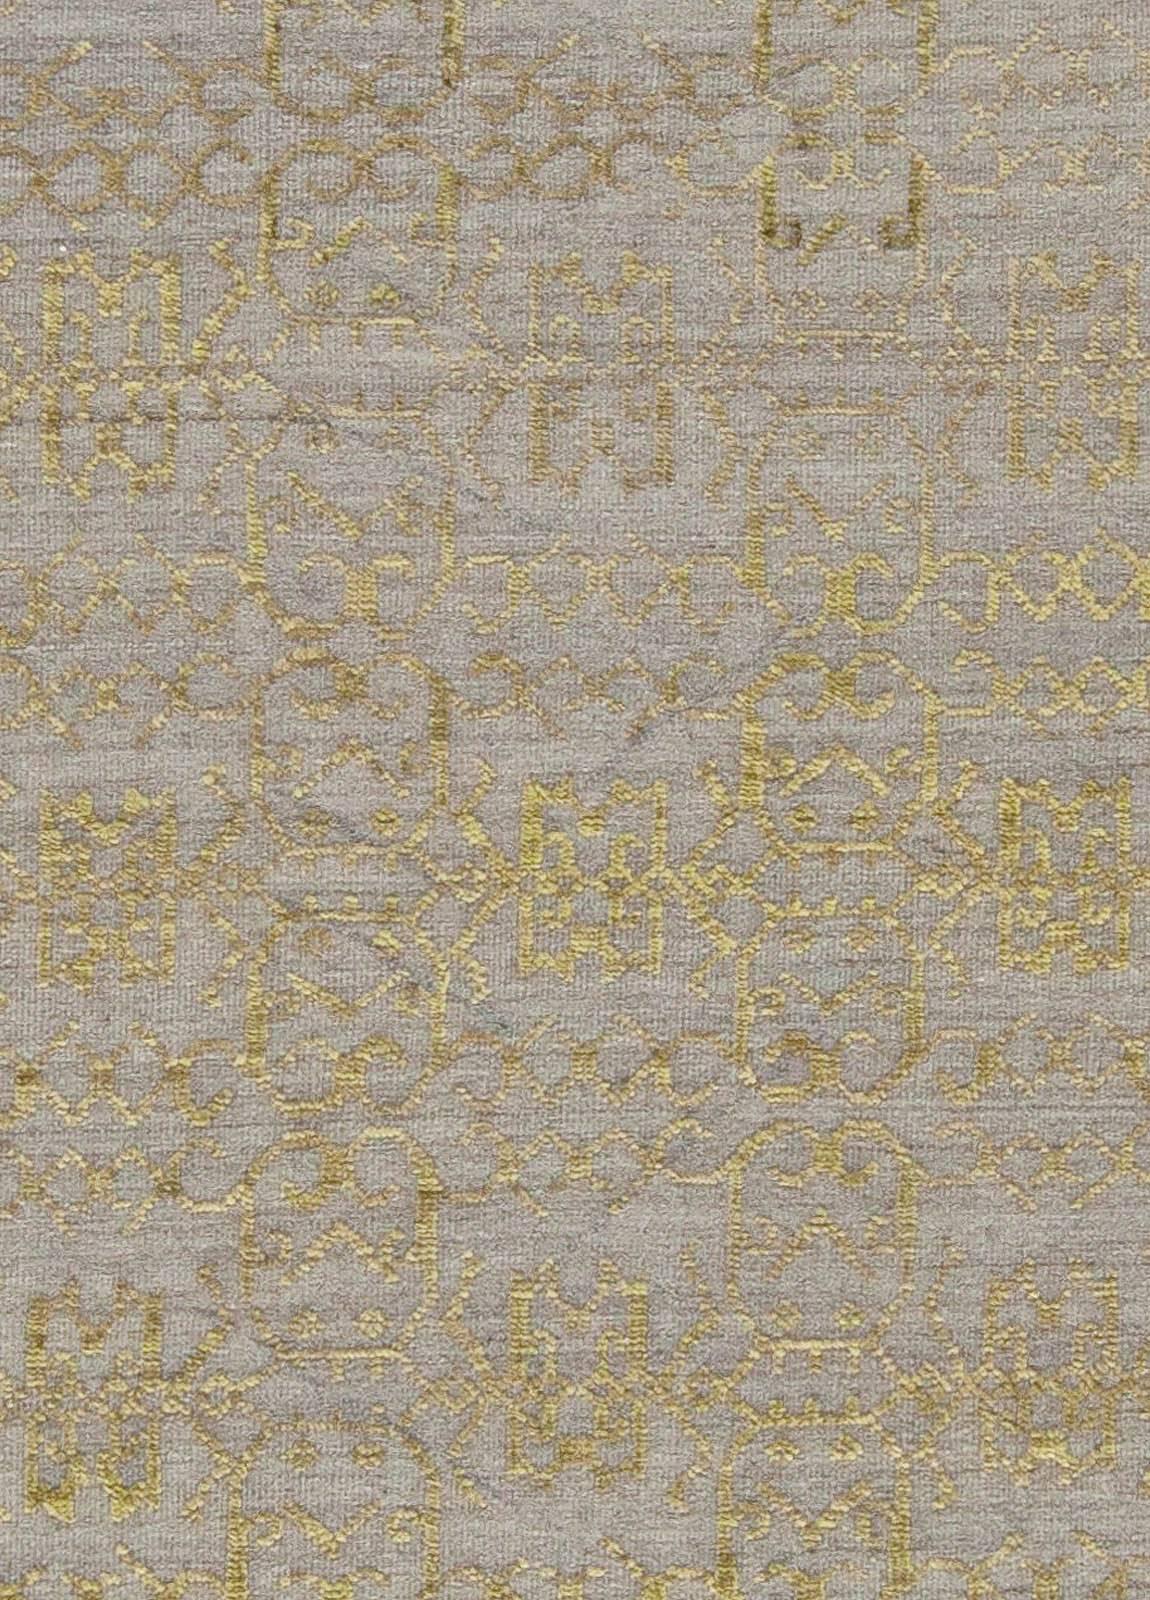 Contemporary traditional Samarkand design handmade wool rug by Doris Leslie Blau
Size: 10'0